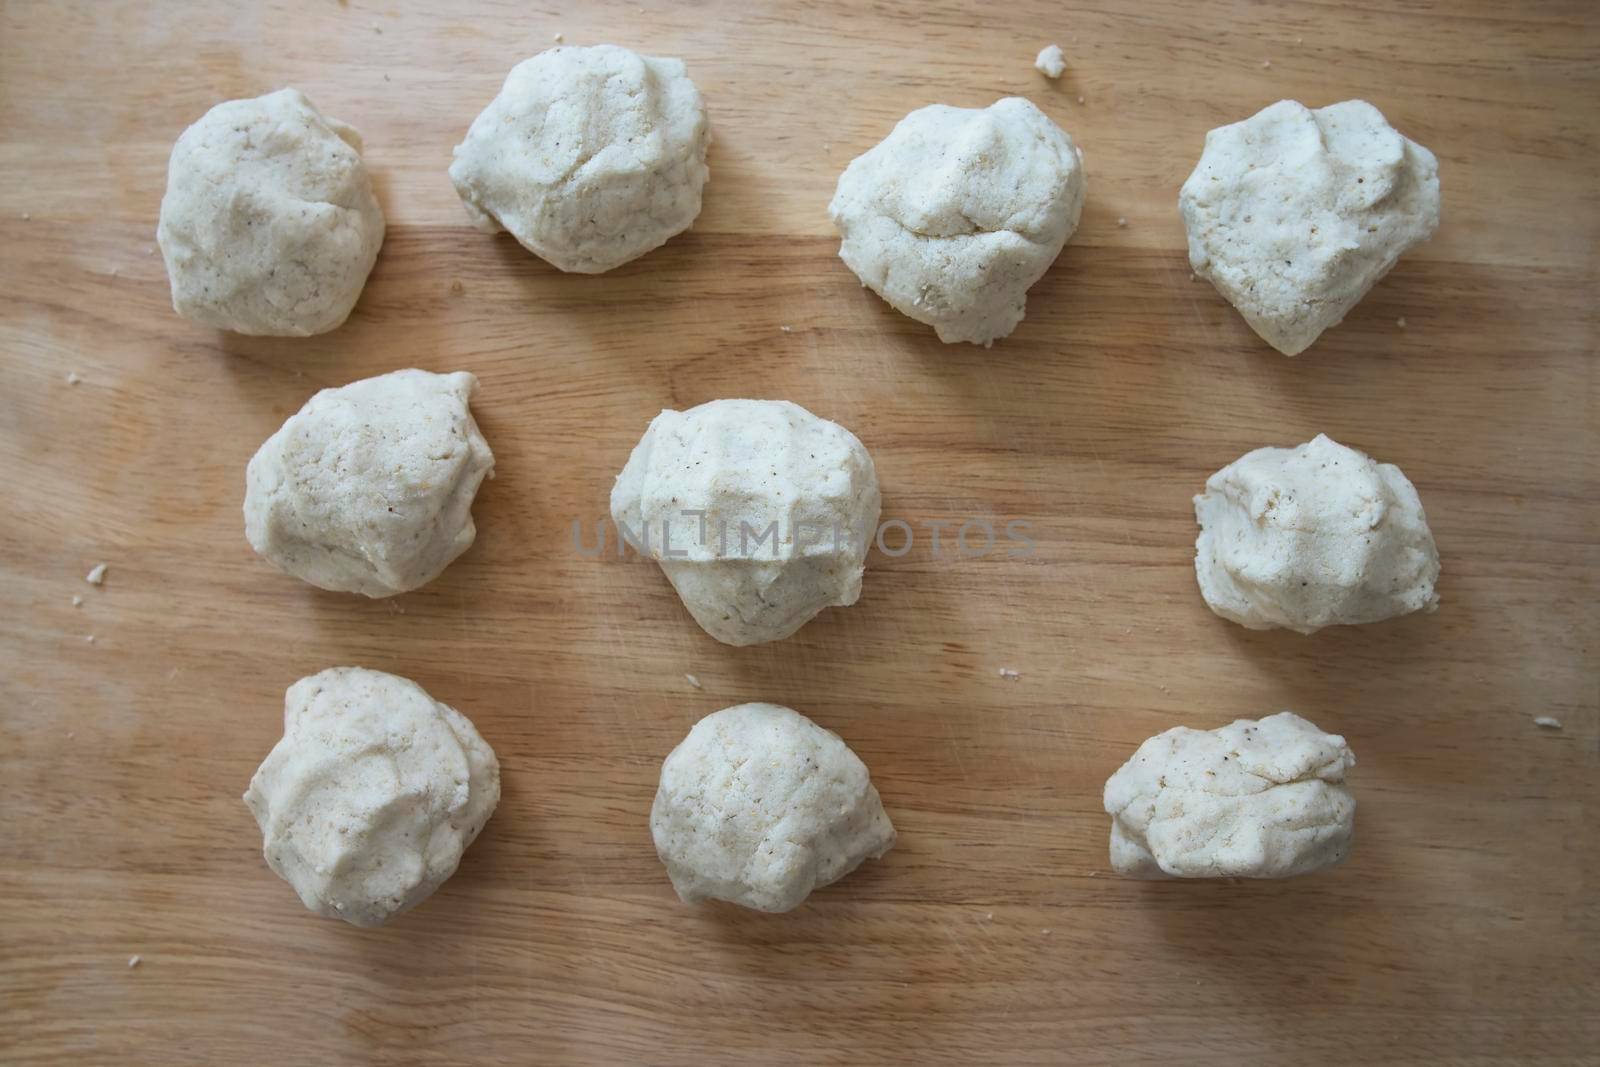 Dough balls made from harina masa flour for making corn tortillas.